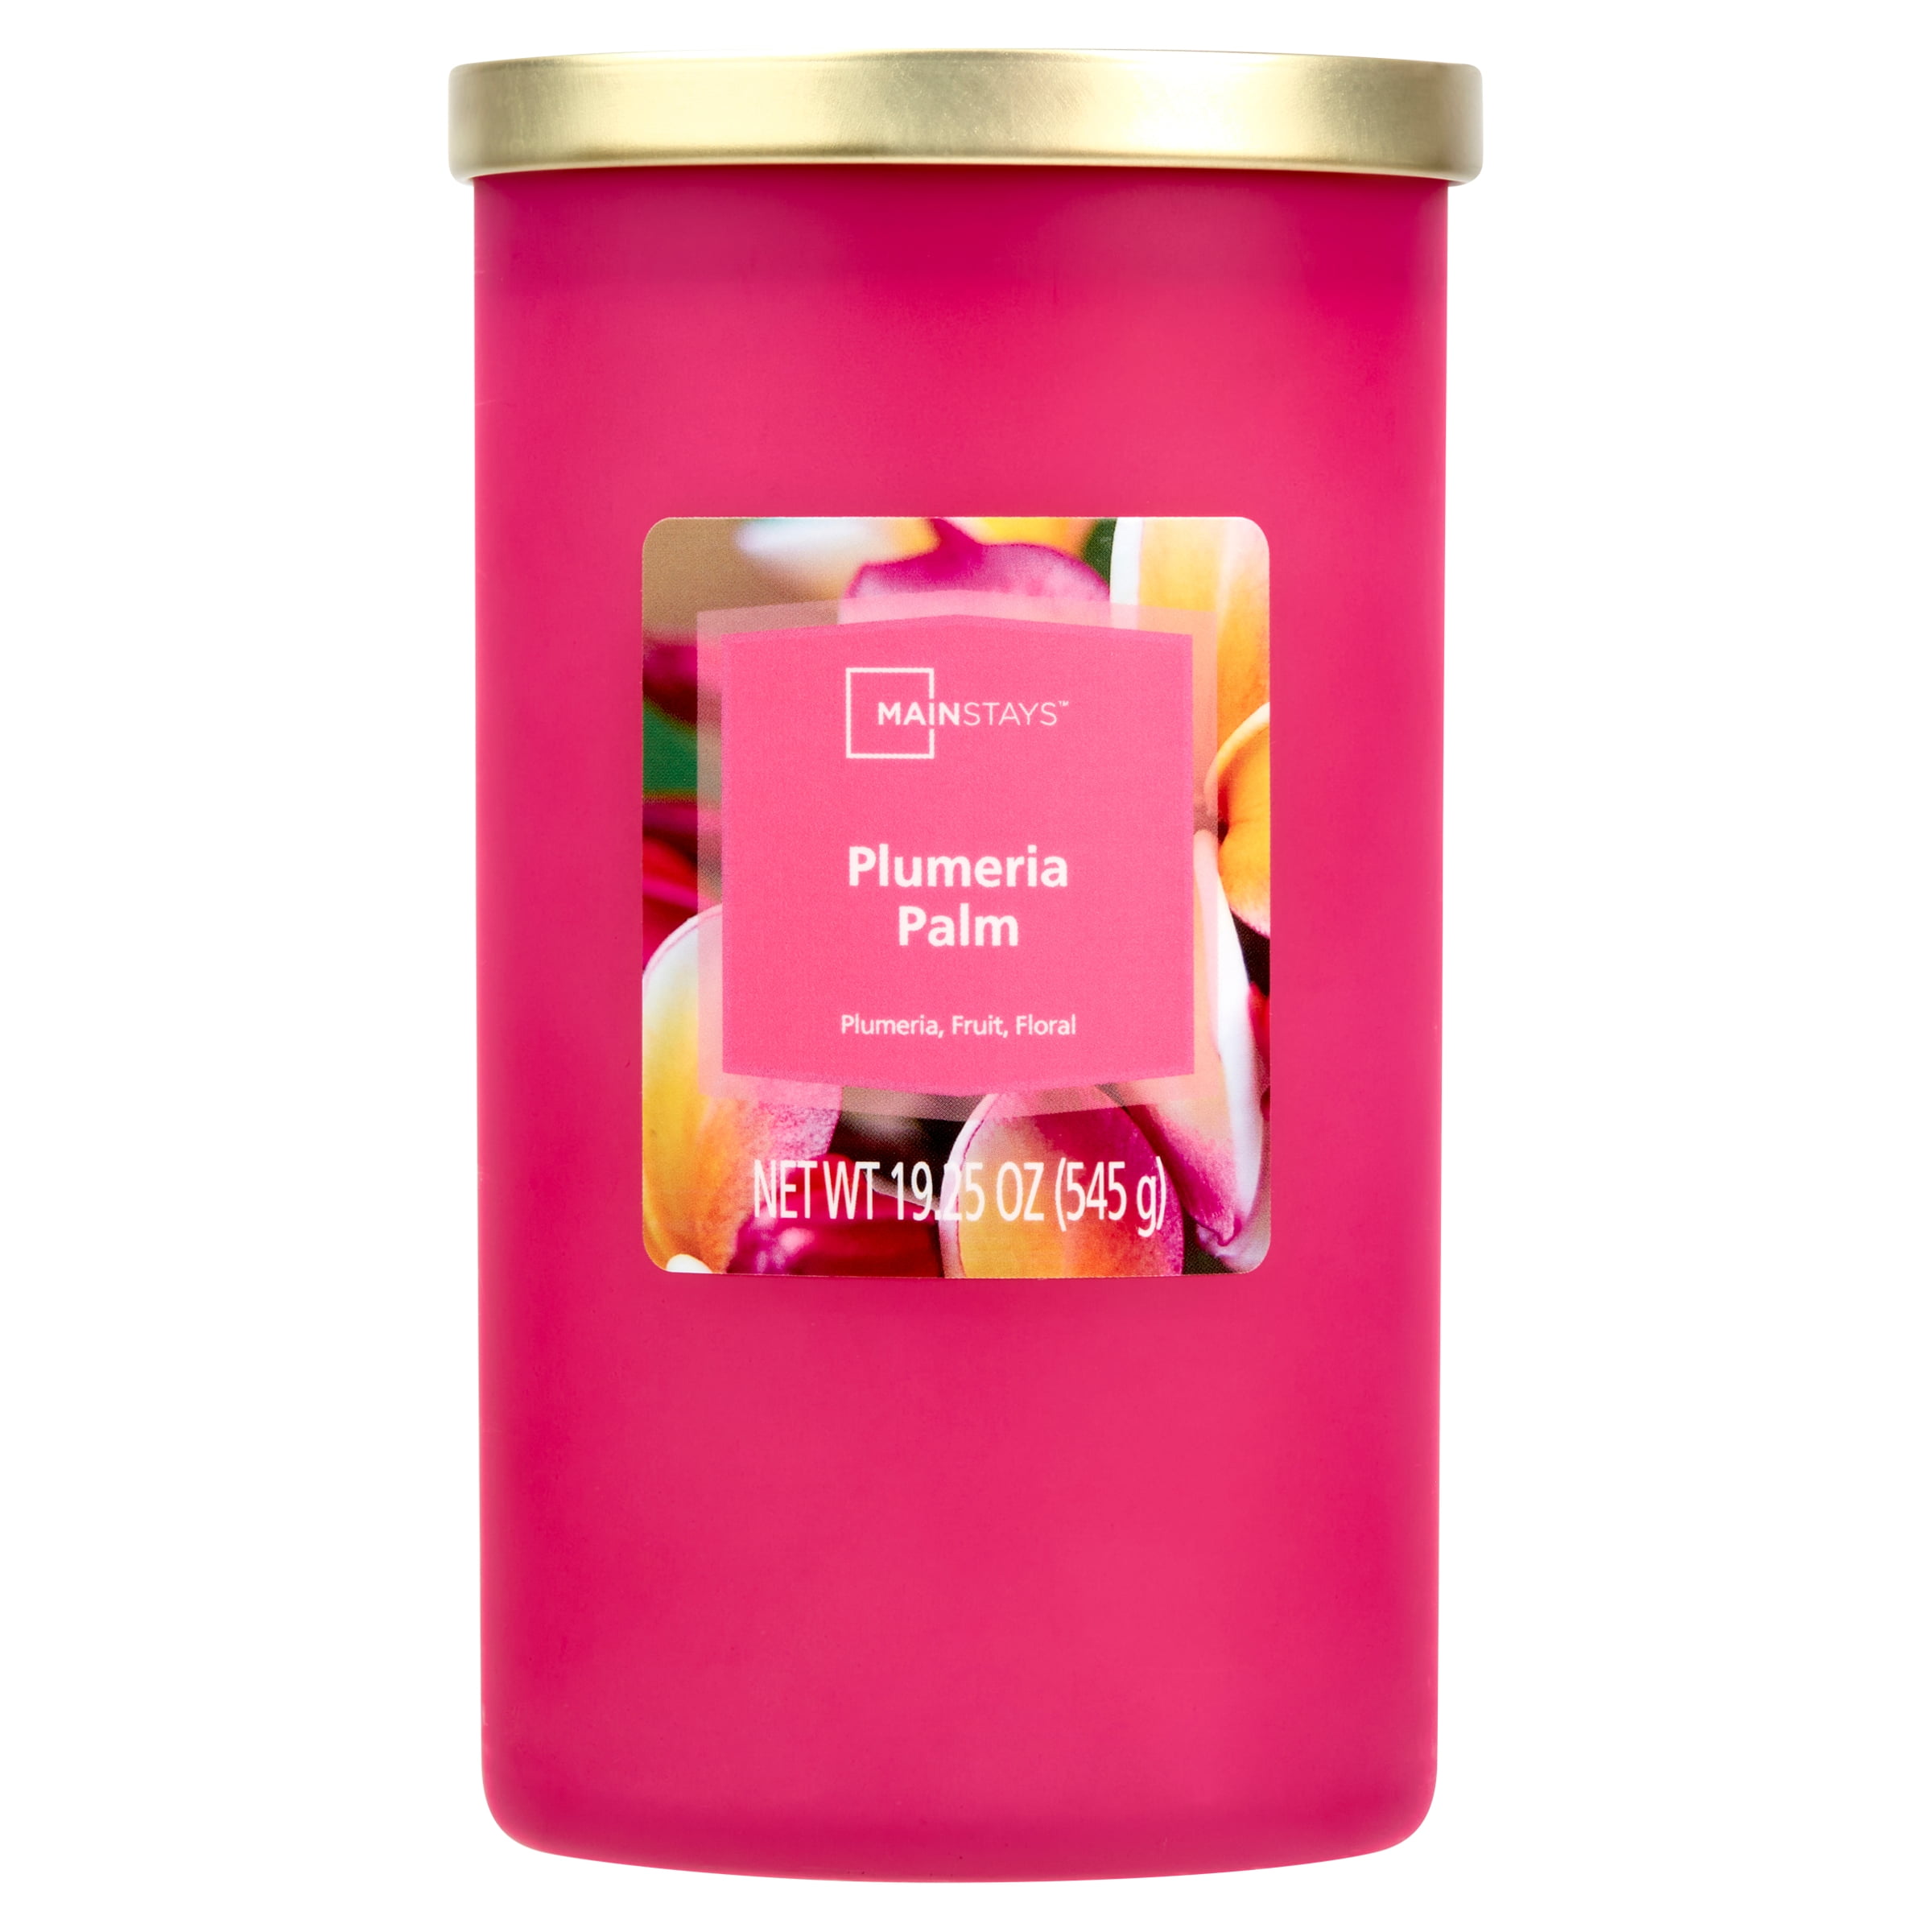 Mainstays Plumeria Palm Scented 3-Wick Glass Jar Candle, 11.5 oz 